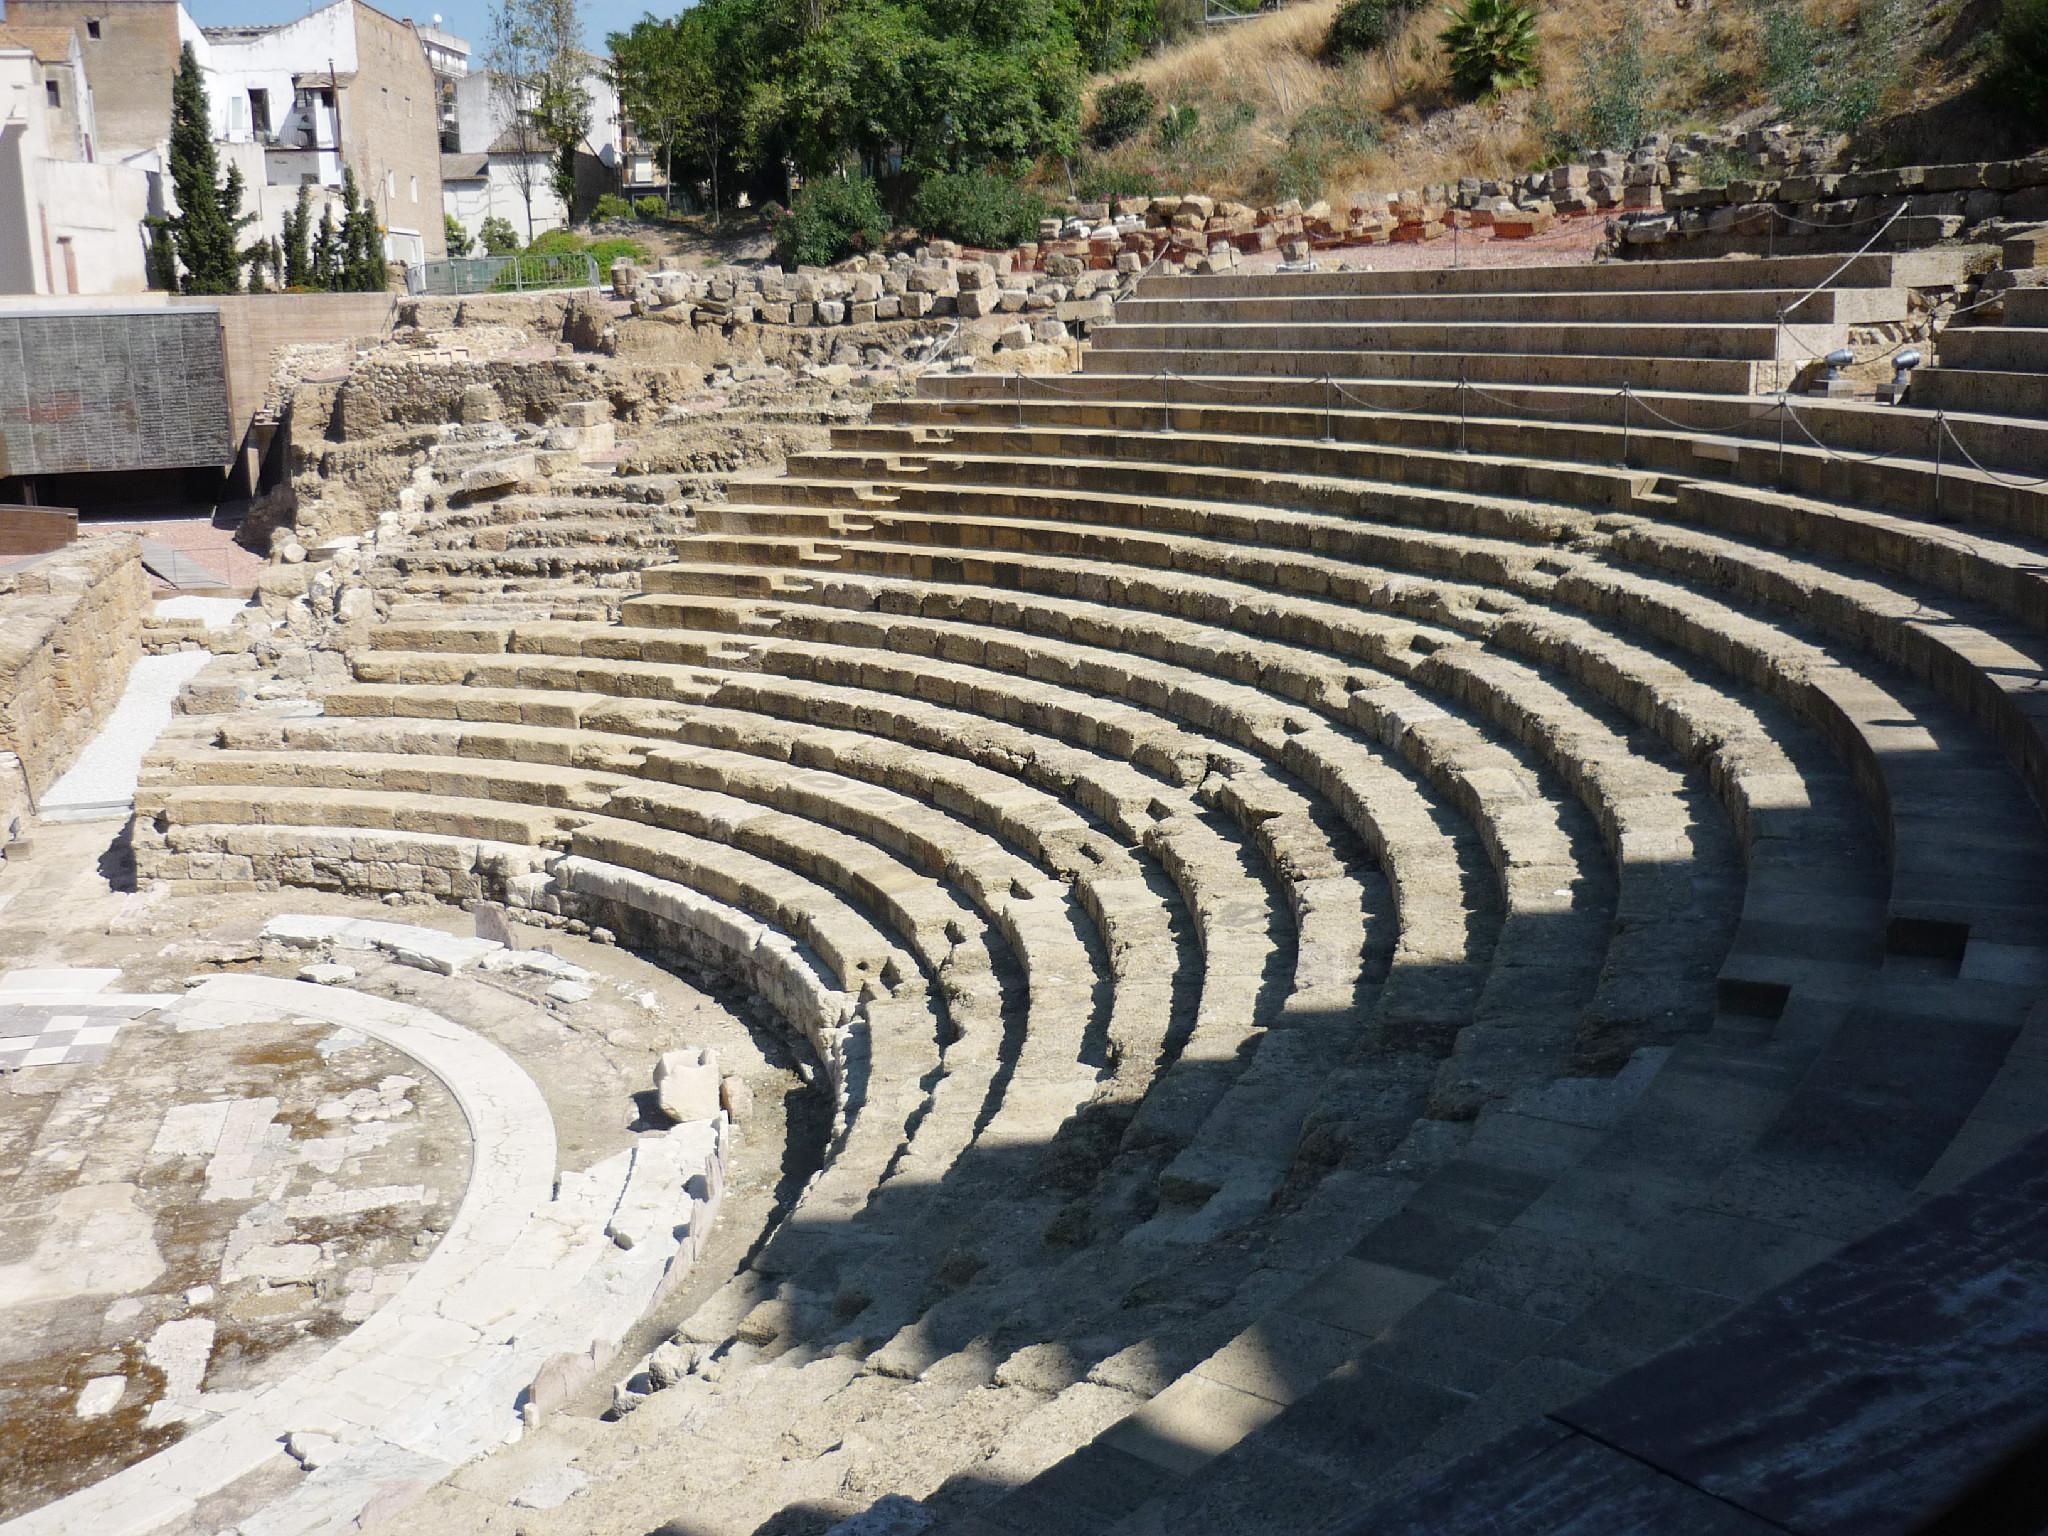 amphitheatre | Al-Andalus Creations's Blog